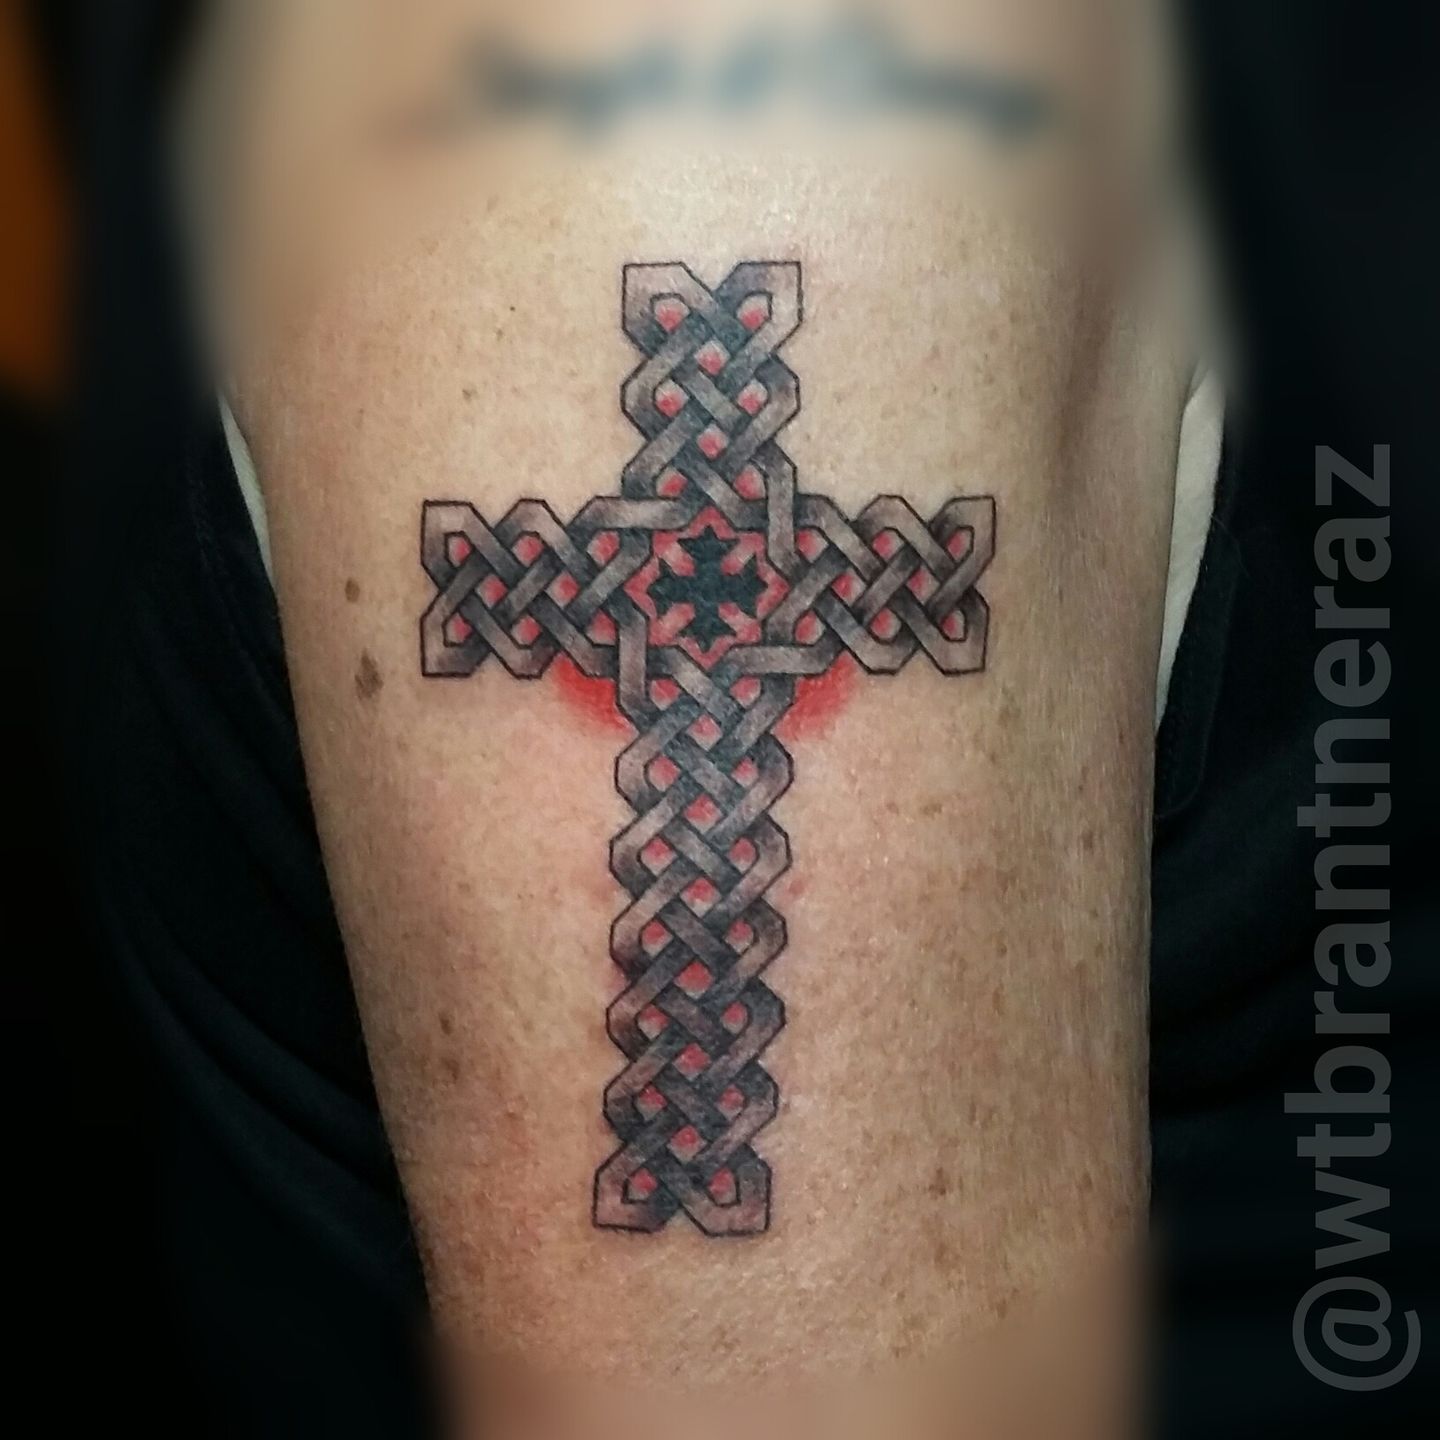 Coptic cross tattoo | from the NOLA trip 2006 | LG Quezon | Flickr